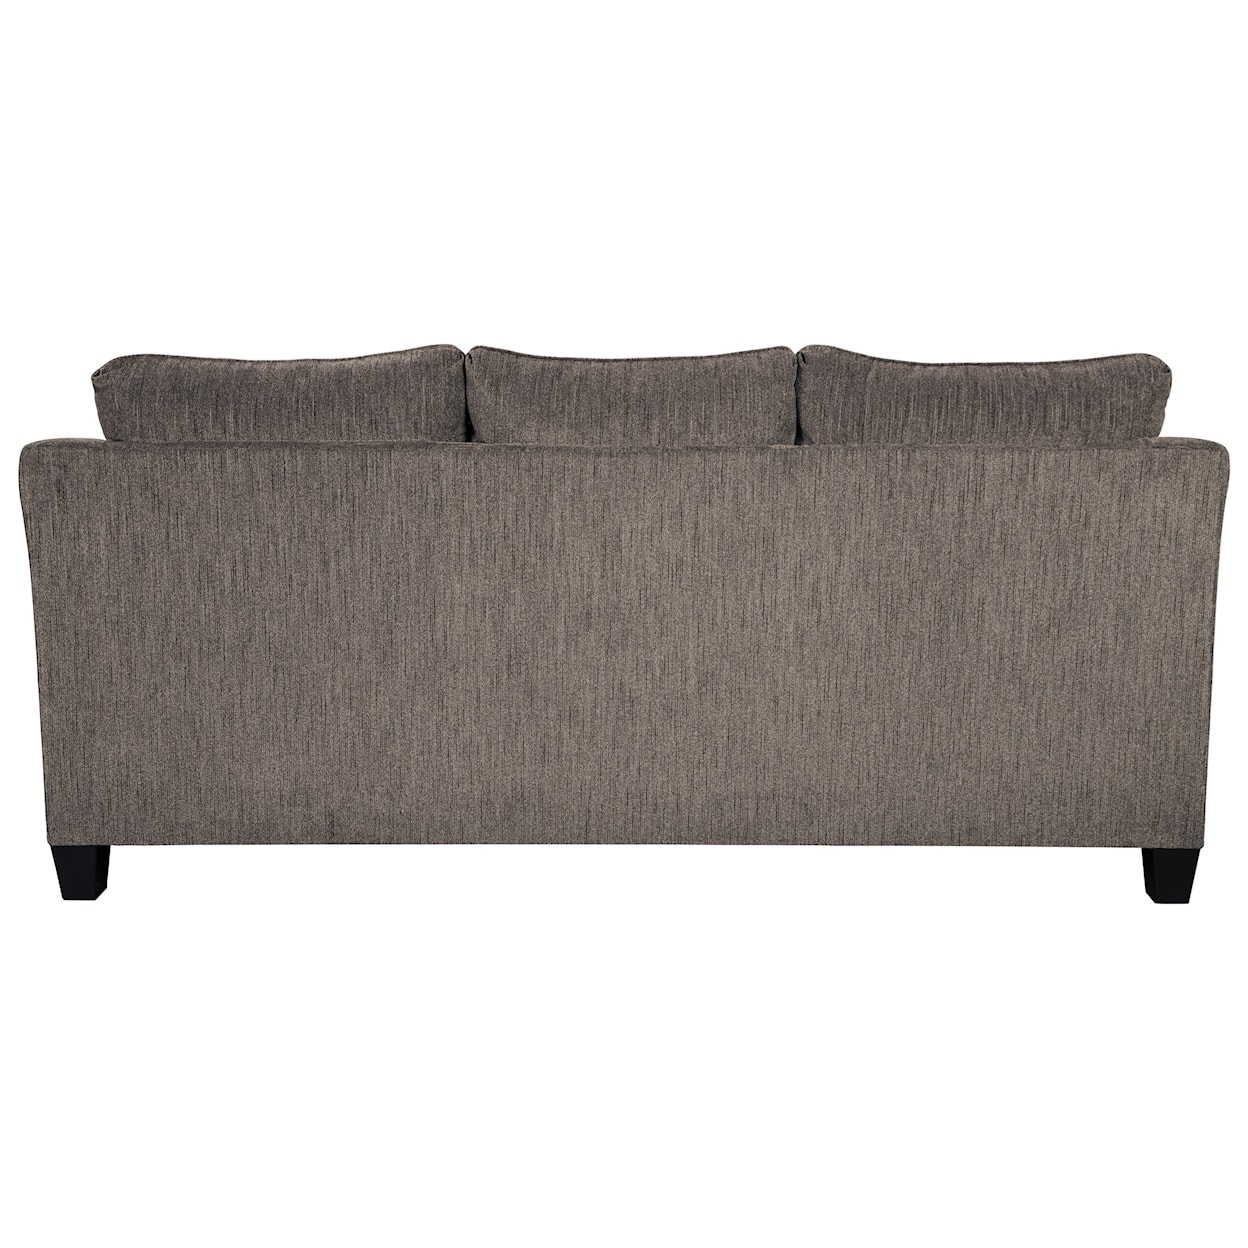 Ashley Furniture Signature Design Nemoli Sofa